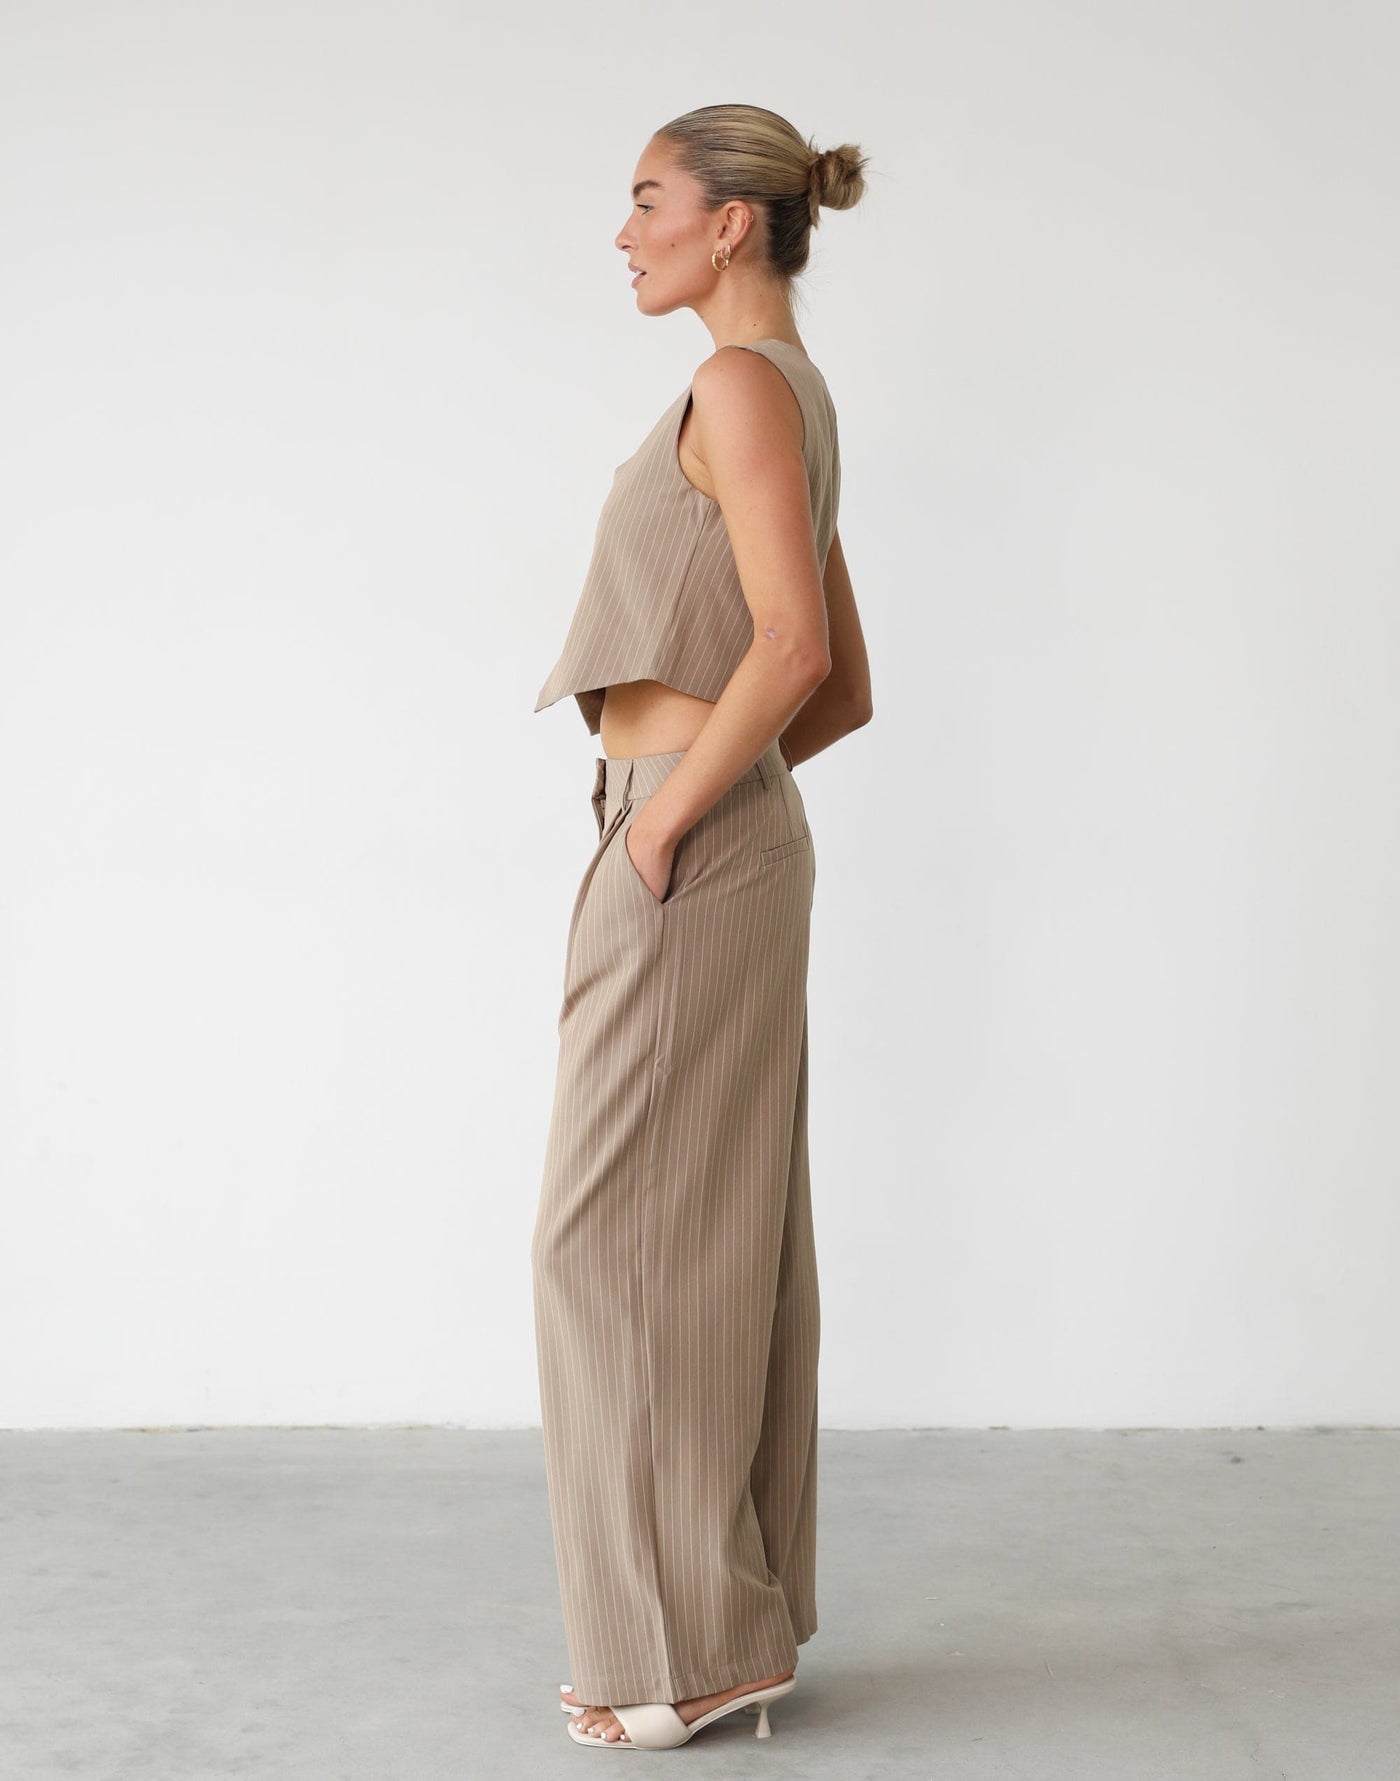 Tiffanie Vest (Beige Pinstripe) - Beige Pinstripe Vest - Women's Top - Charcoal Clothing